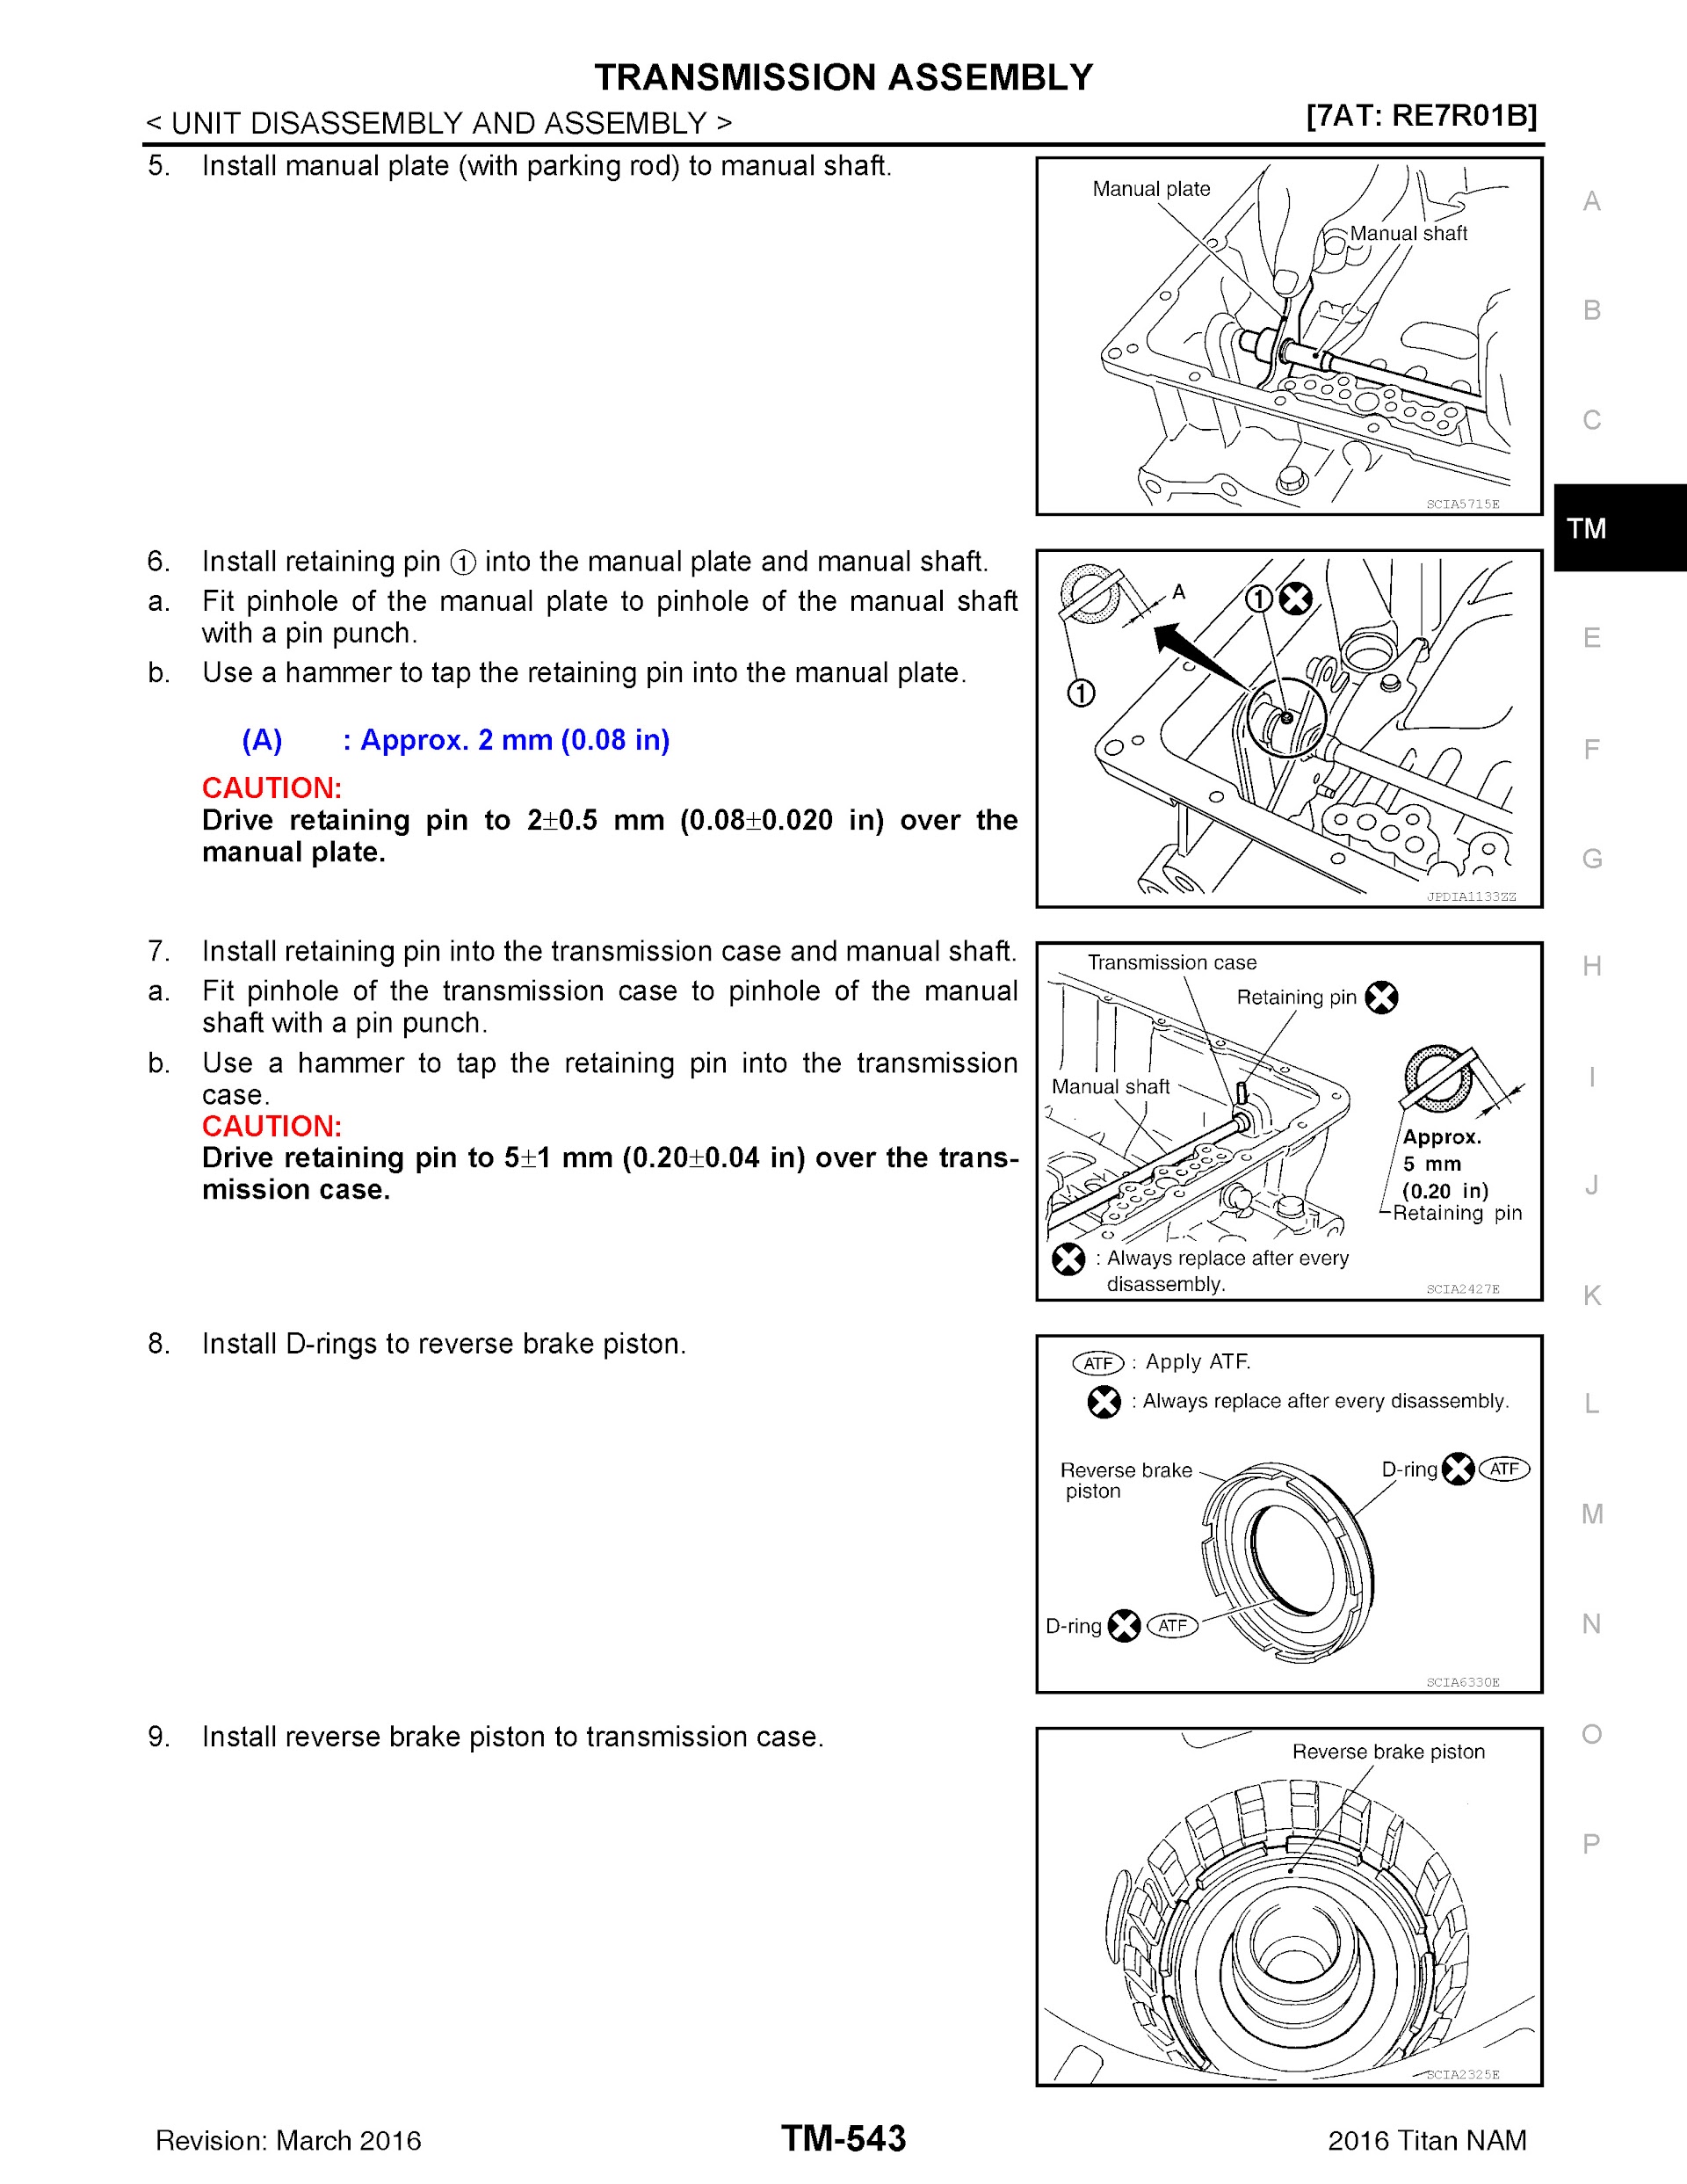 2016 Nissan Titan XD Repair Manual, Tranmission Assembly, 7AT RE7R01B